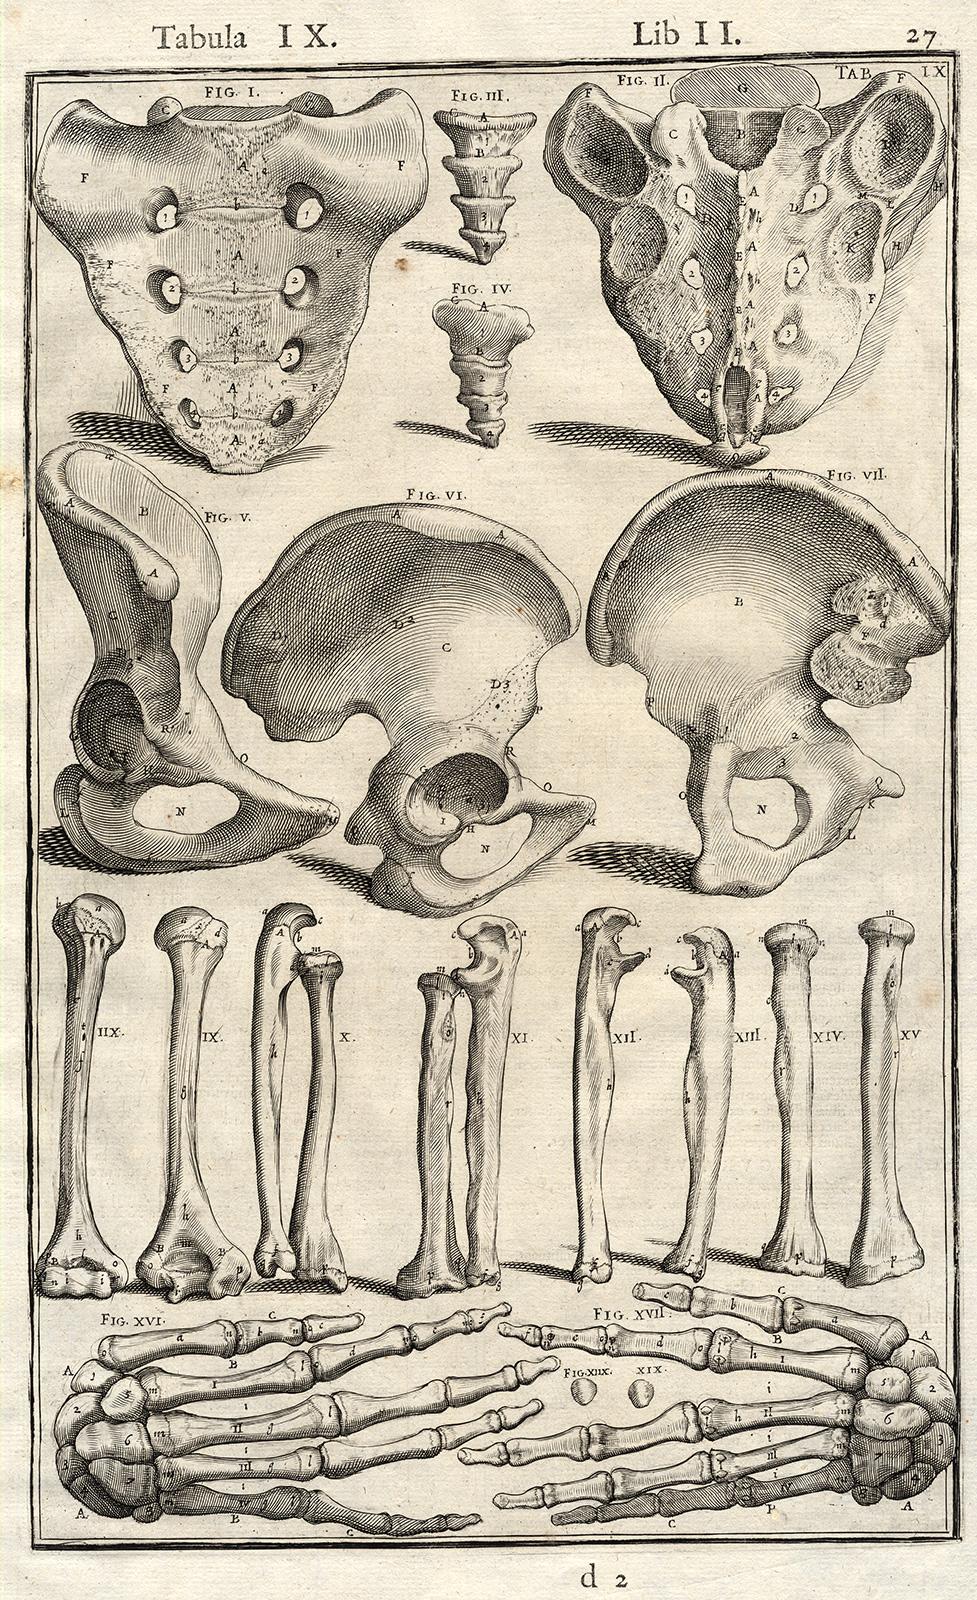 Adrianus Spigelius Print - Anatomical print - bones of hands, arms, etc - by Spigelius - Engraving - 17th c